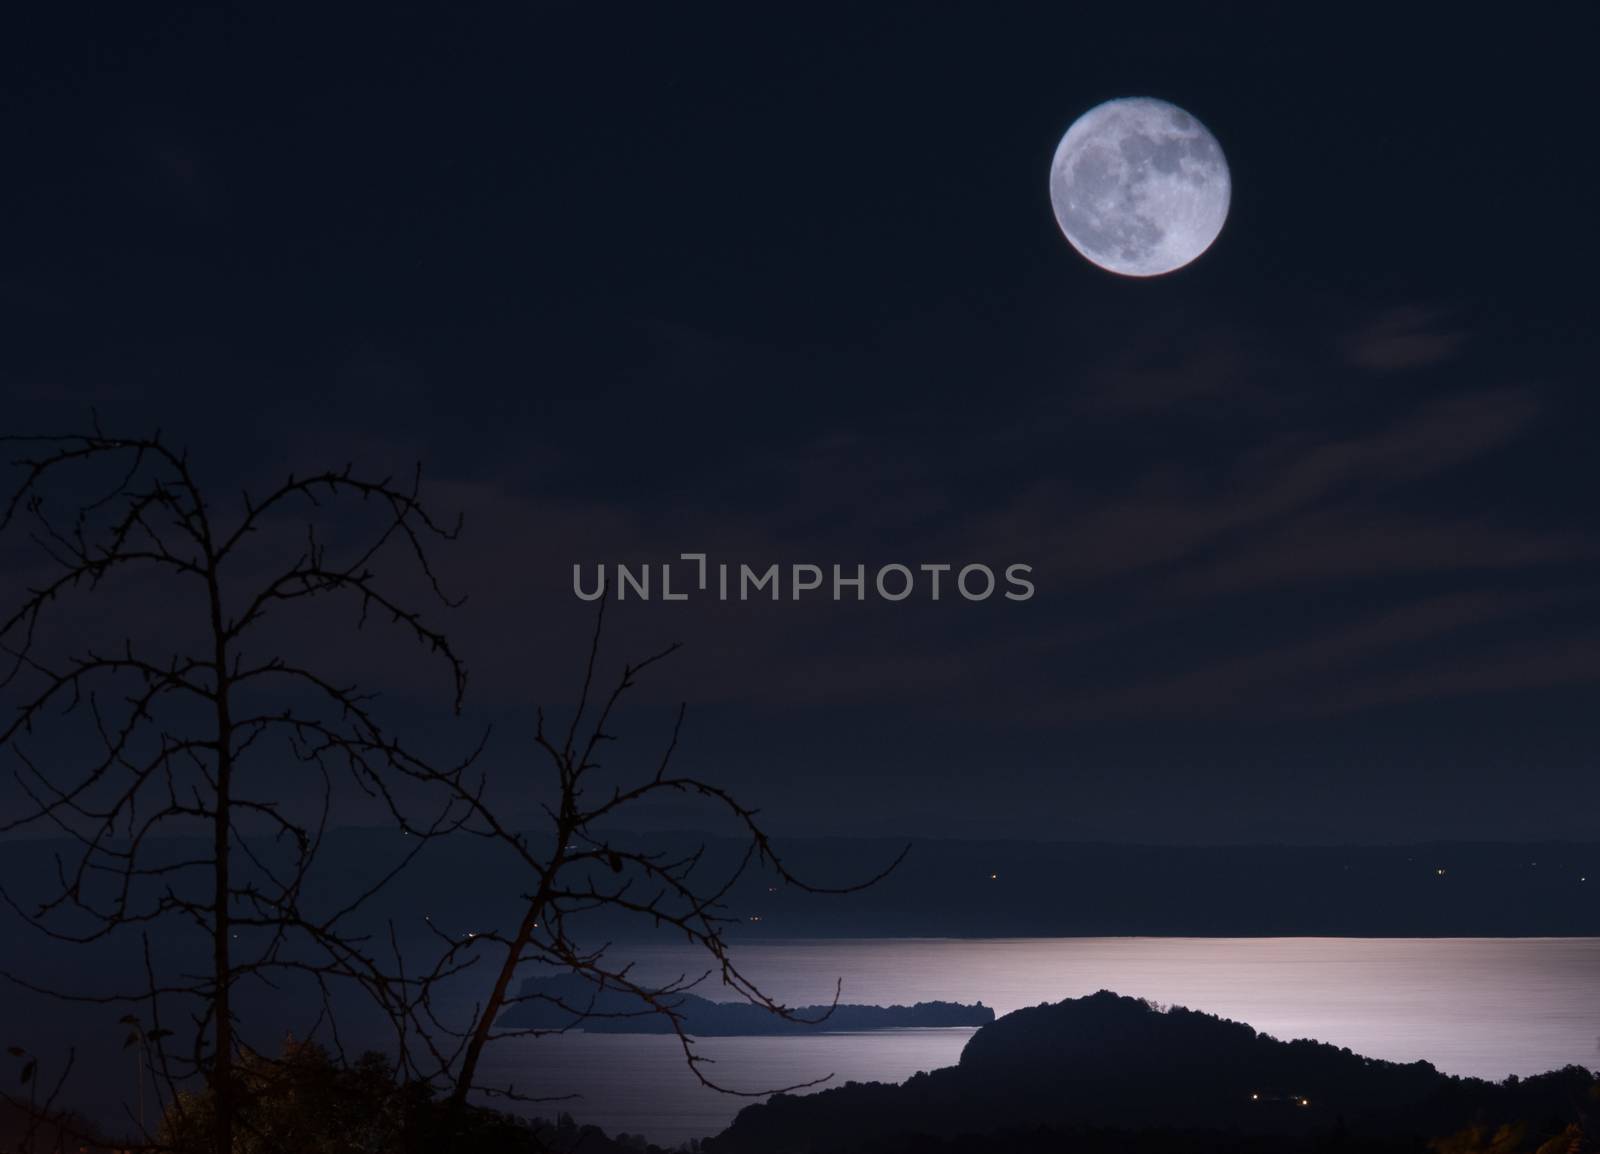 Full moon, light reflecting on a lake